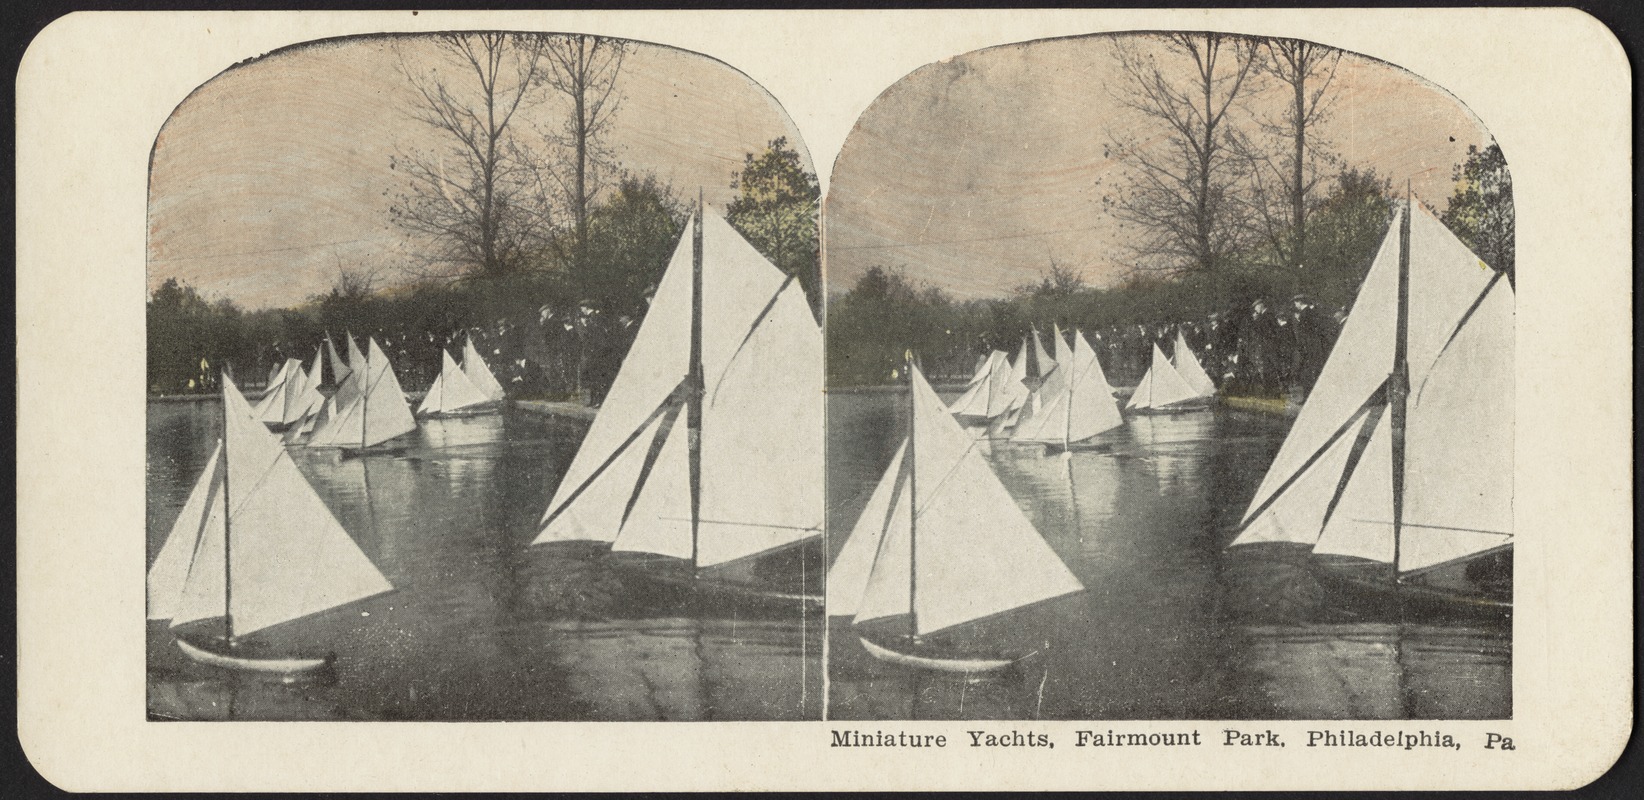 Miniature yachts, Fairmount Park, Philadelphia, Pa